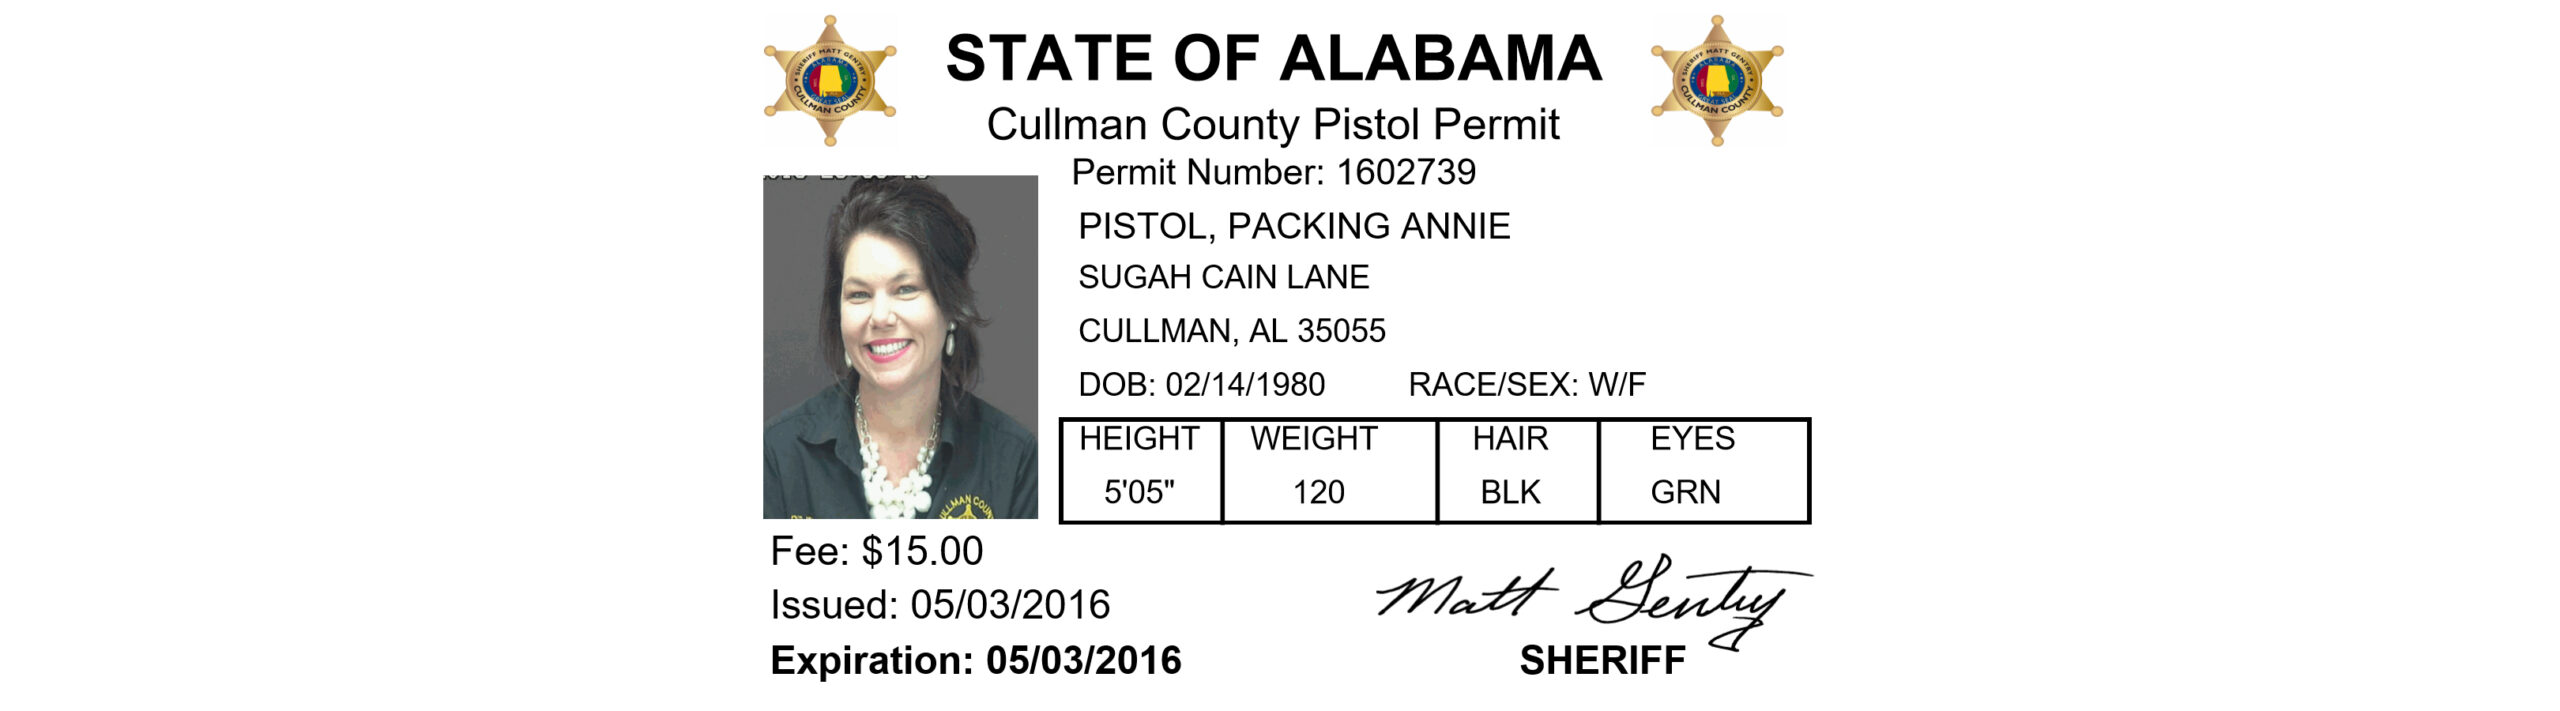 Cullman County Sheriff's Office Pistol Permits